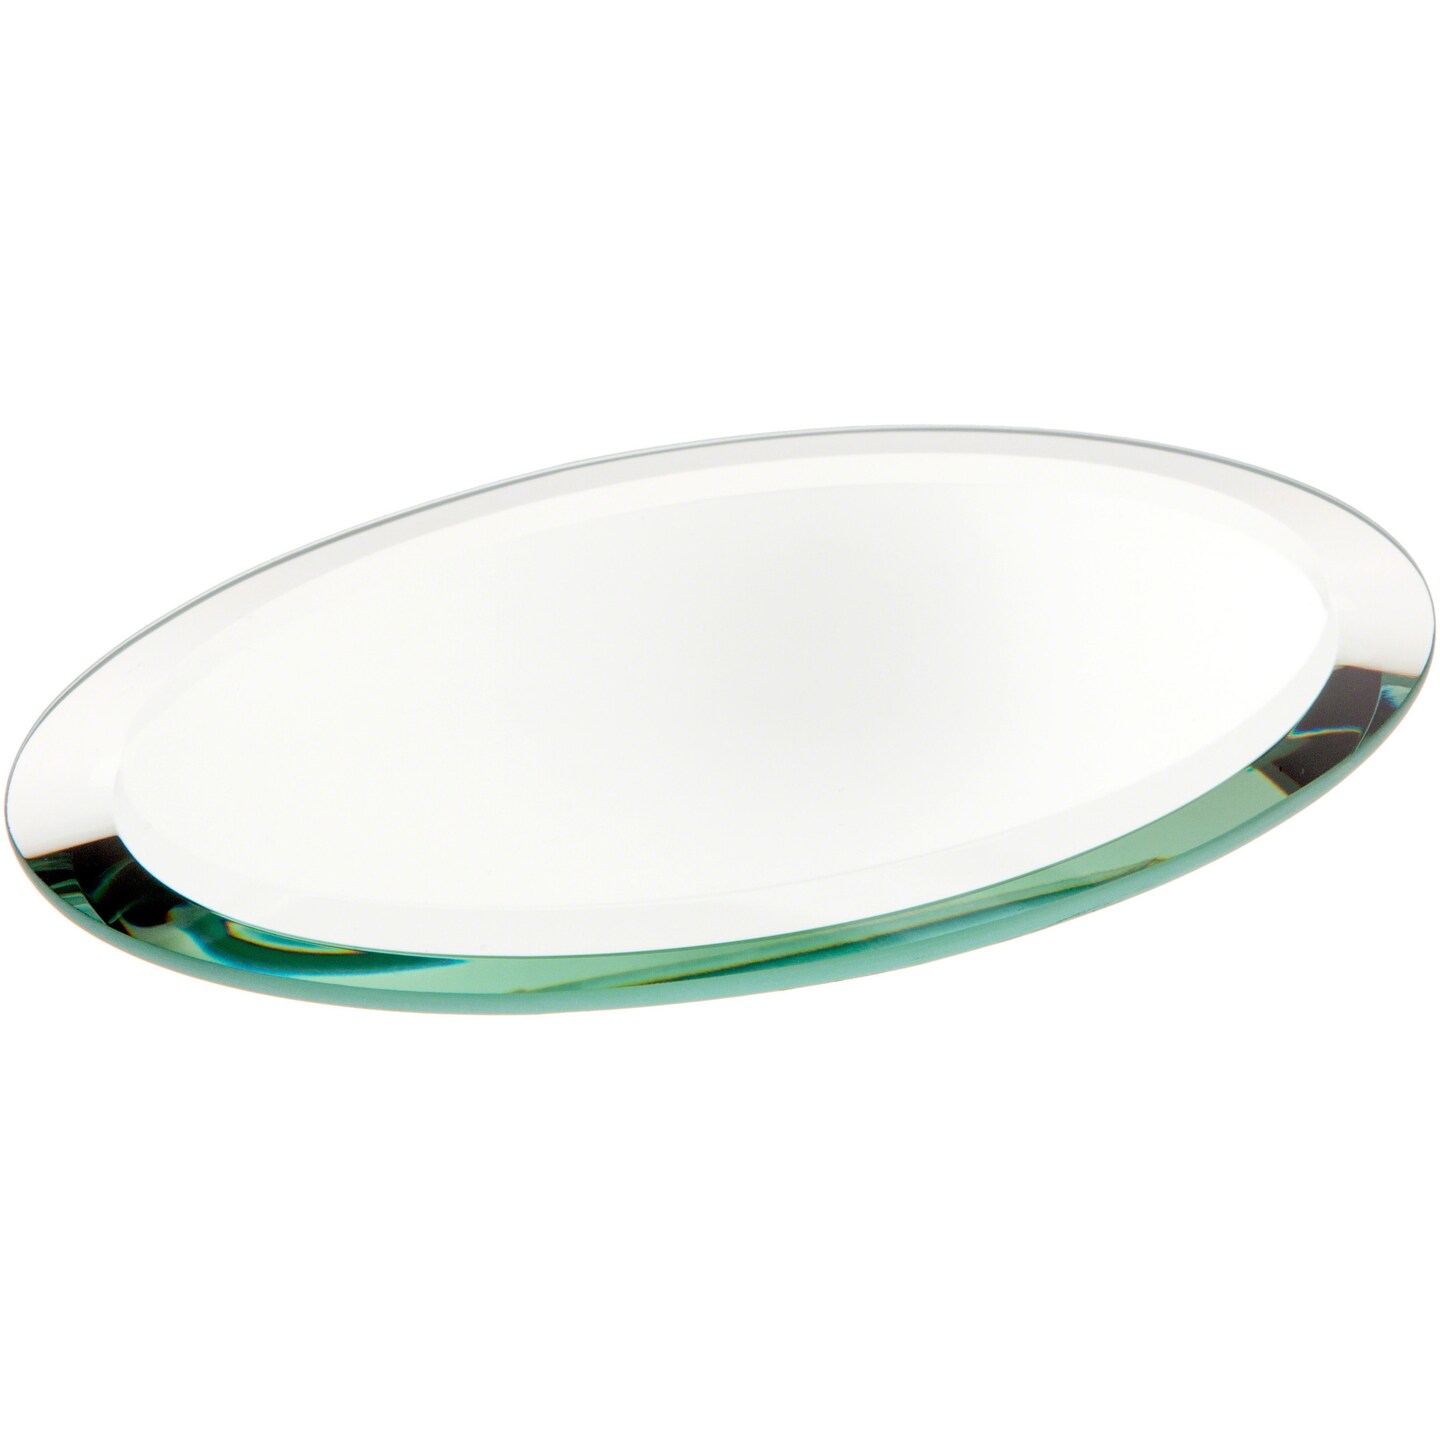 Plymor Oval 5mm Beveled Glass Mirror, 4 inch x 6 inch